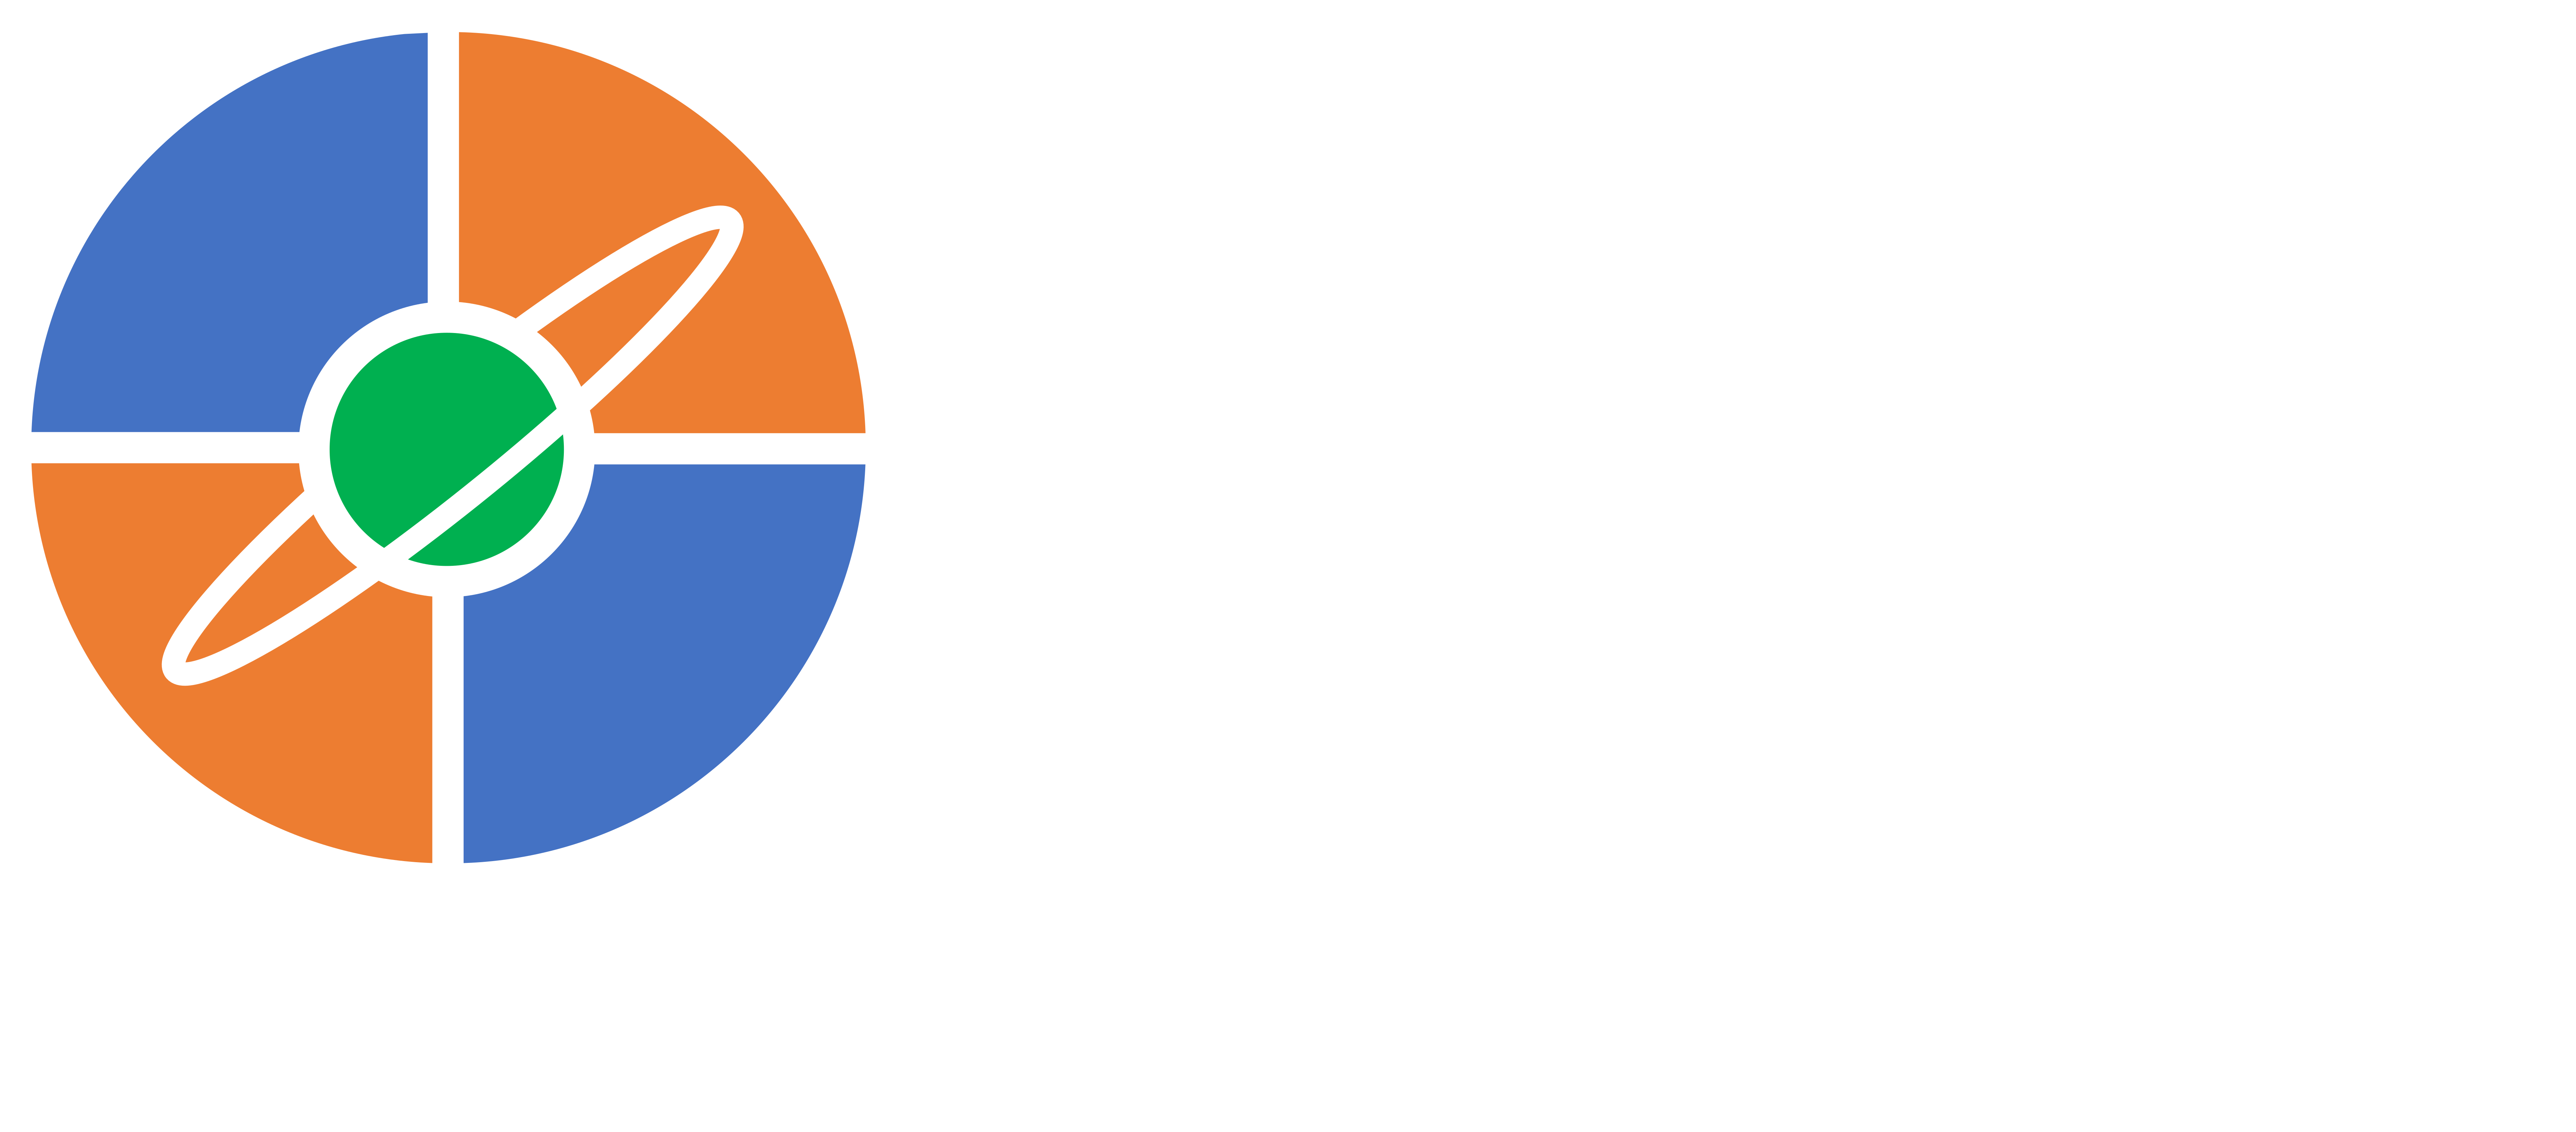 Orb Project Management